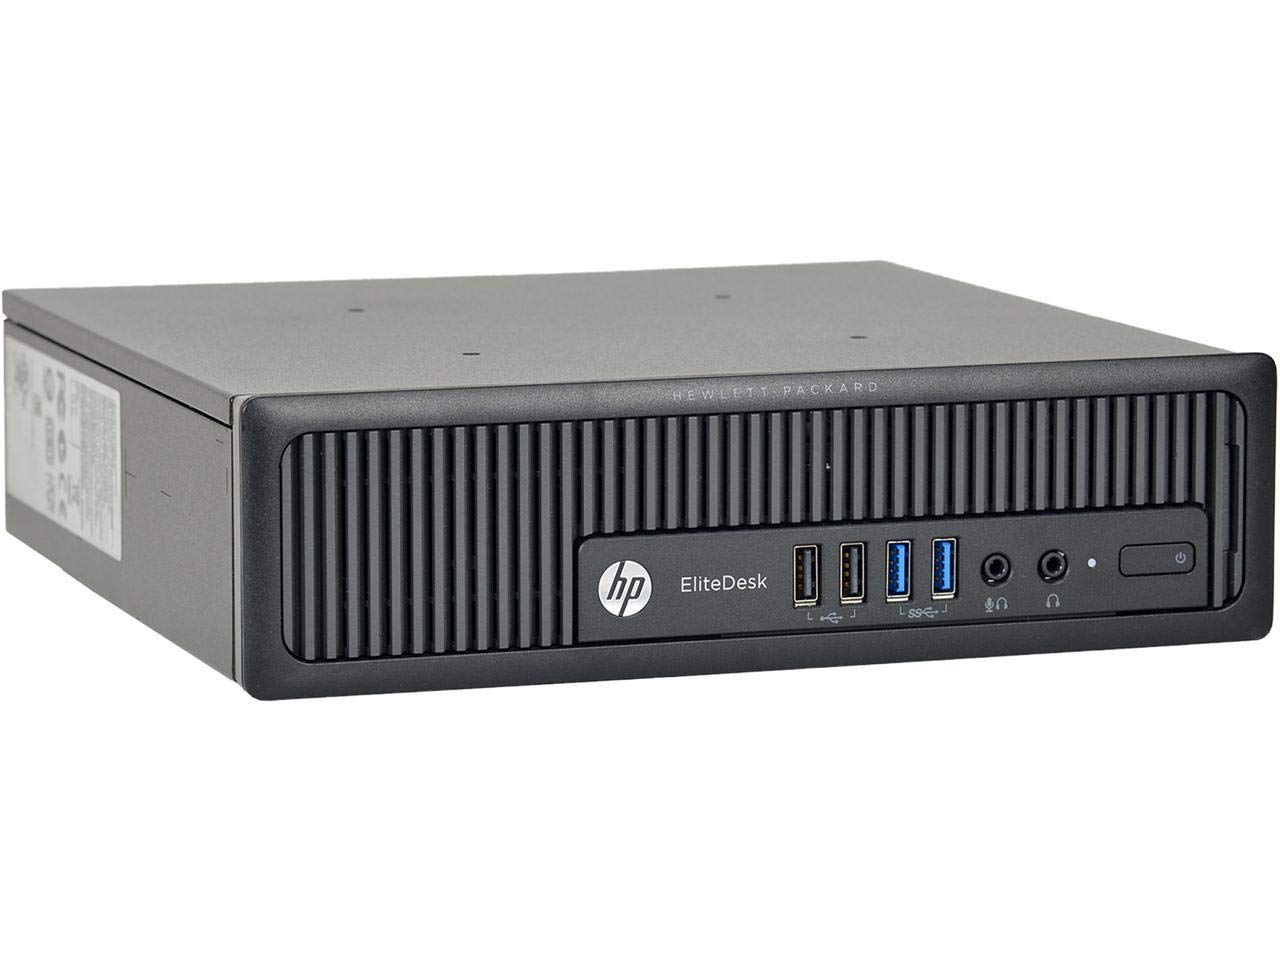 HP 800 G1 USFF Computer Desktop PC, Intel Core i5 3.2GHz Processor, 8GB Ram, 320GB Hard Drive, WiFi | Bluetooth, 1080p Webcam, Wireless Keyboard & Mouse, 22 Inch Monitor, Windows 10 (Renewed)